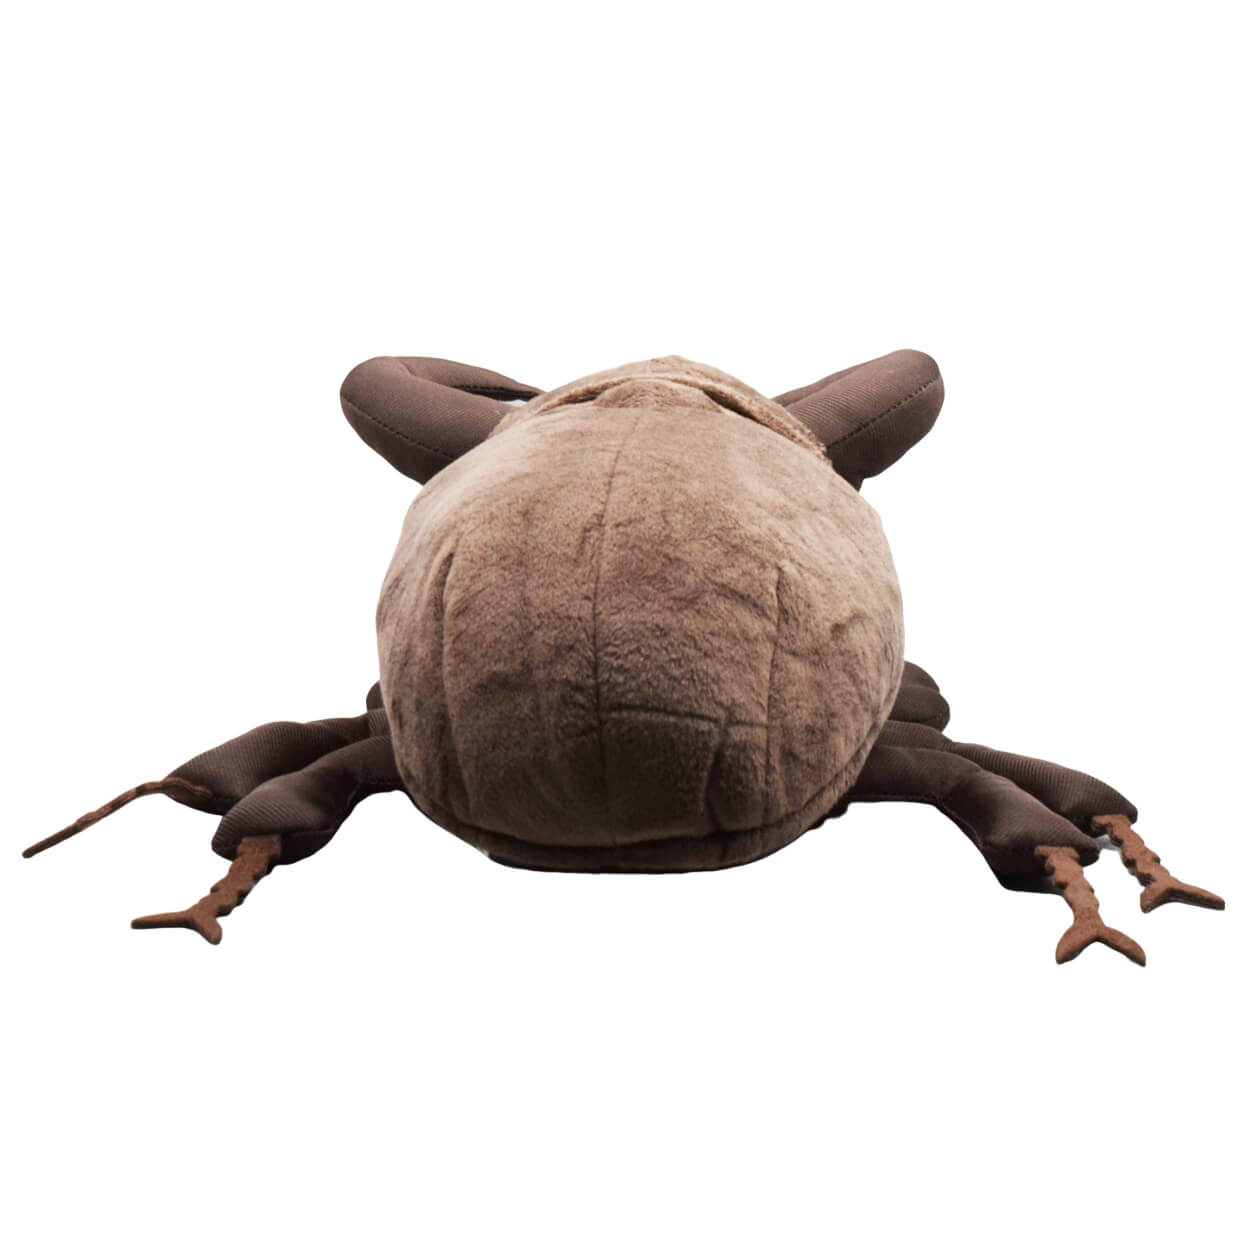 Realistic Atlas Beetle Stuffed Animal Plush Toy